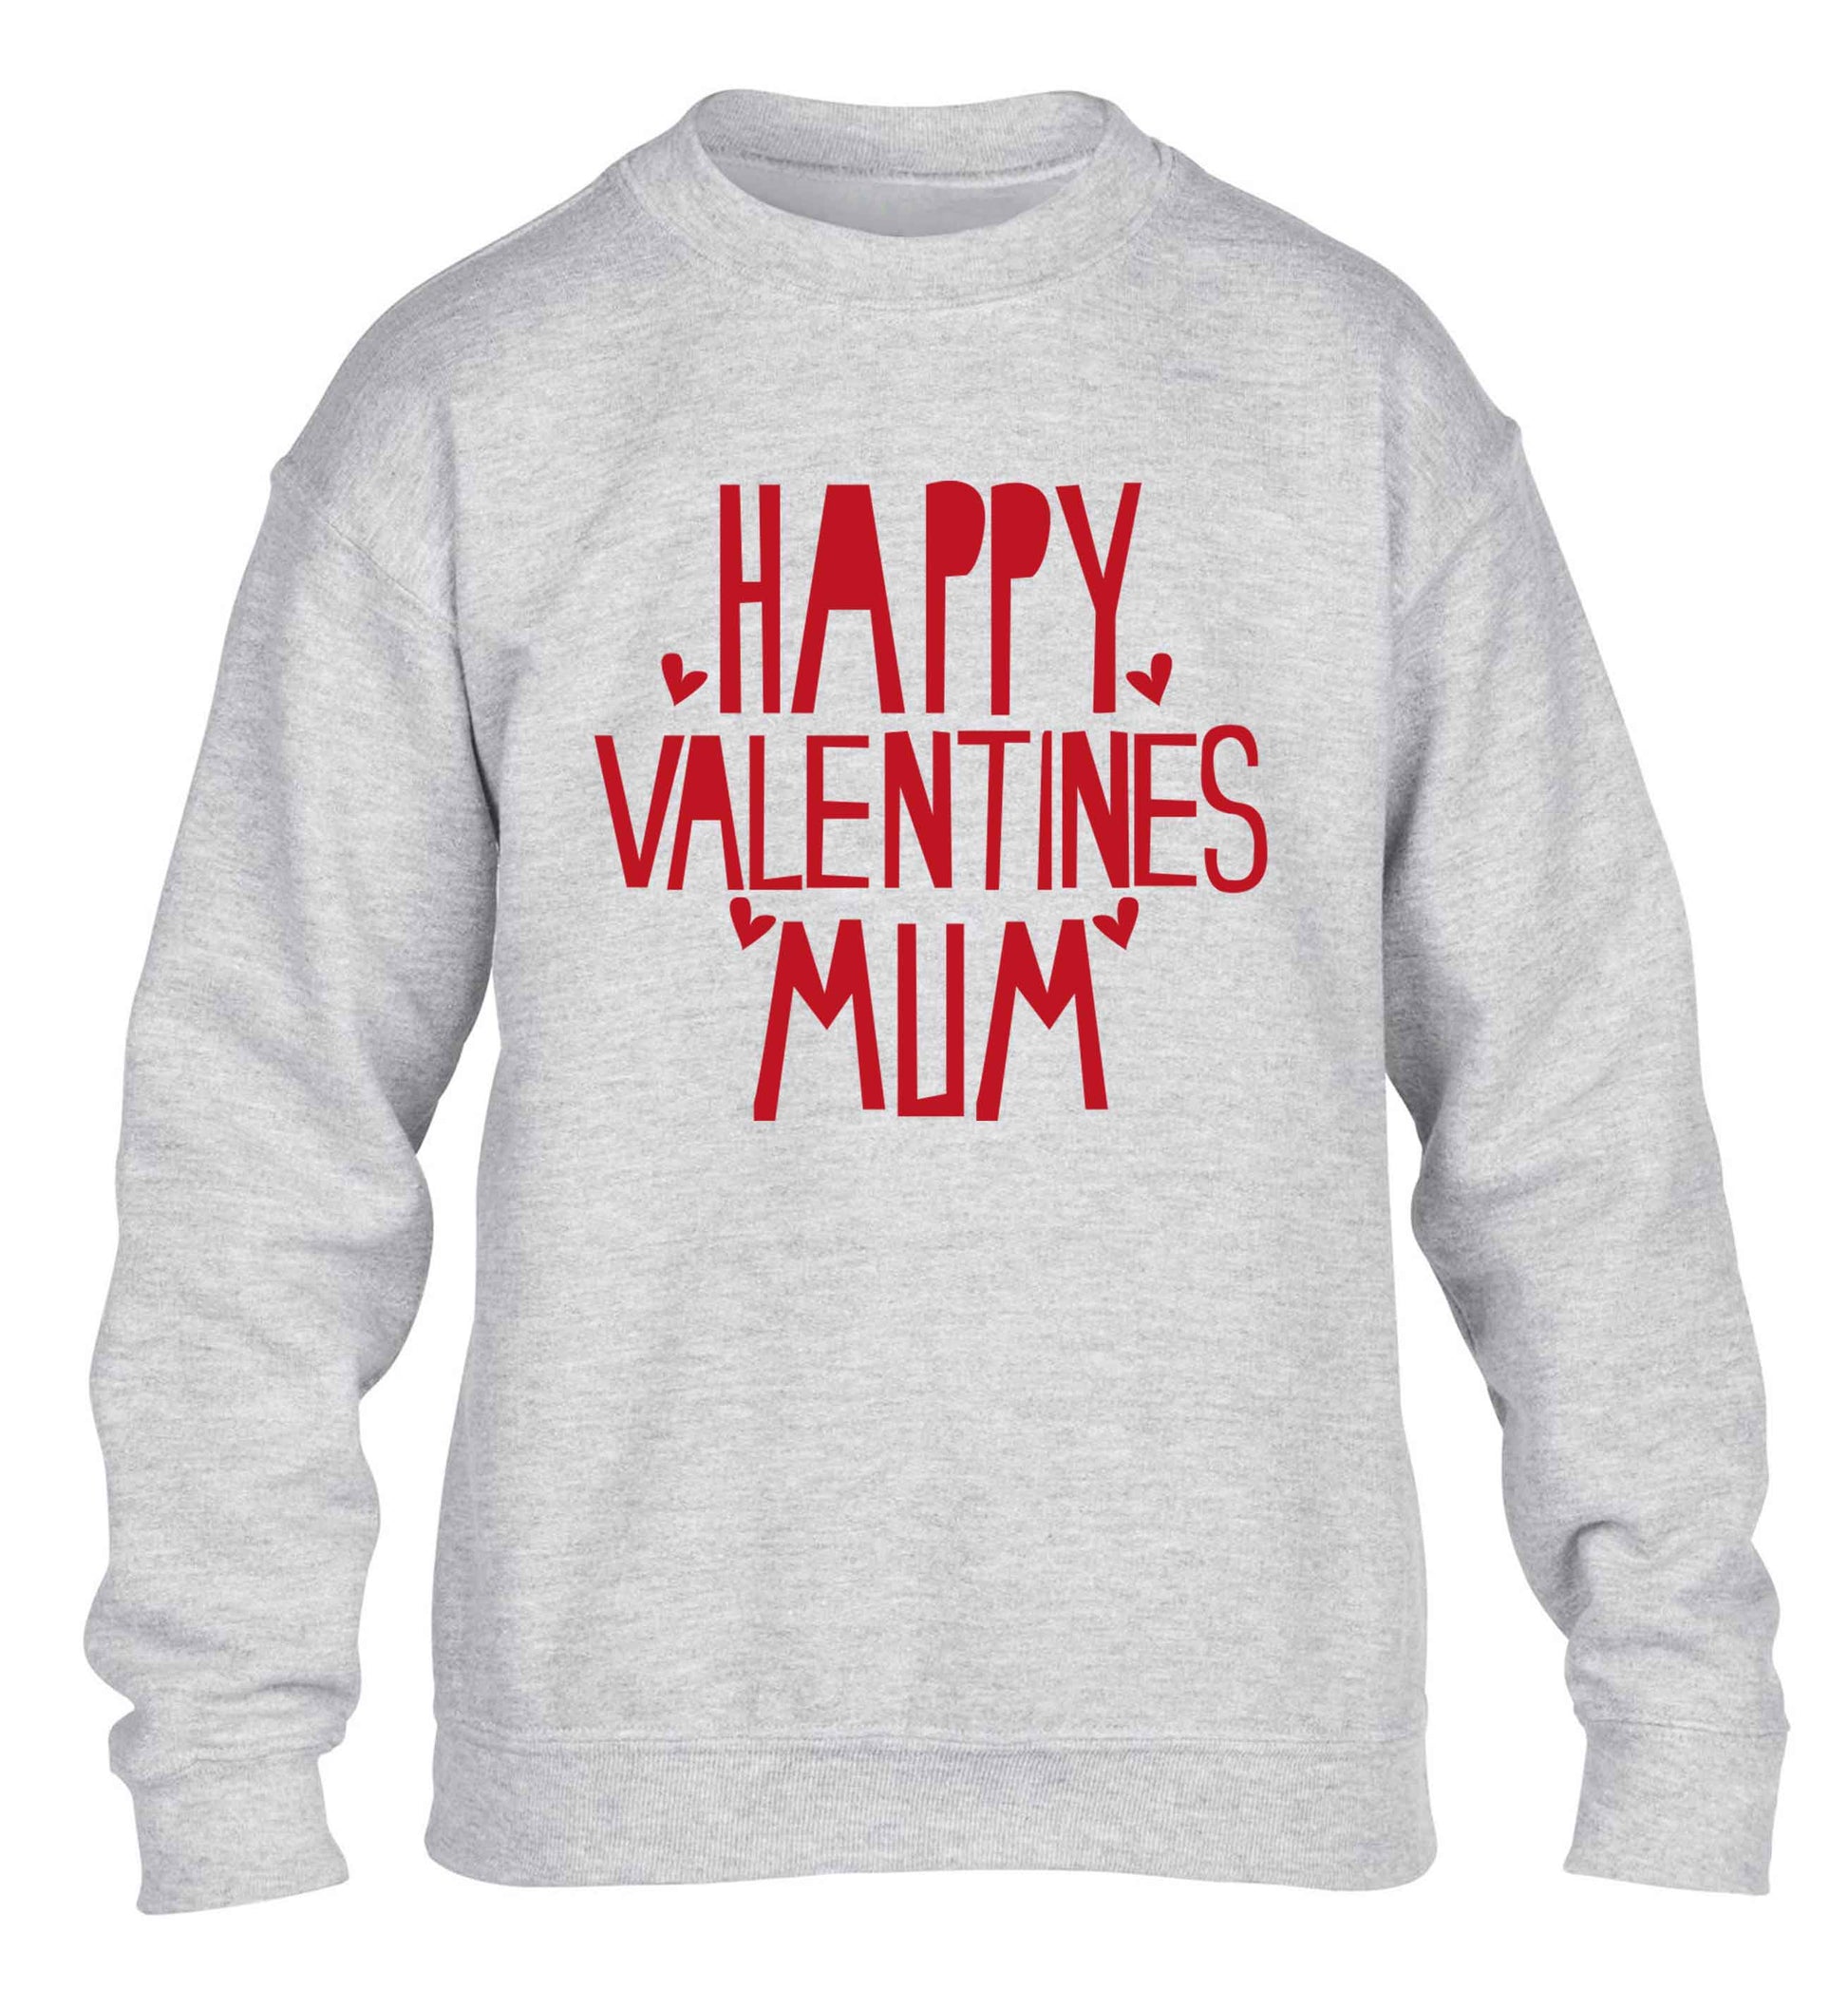 Happy valentines mum children's grey sweater 12-13 Years